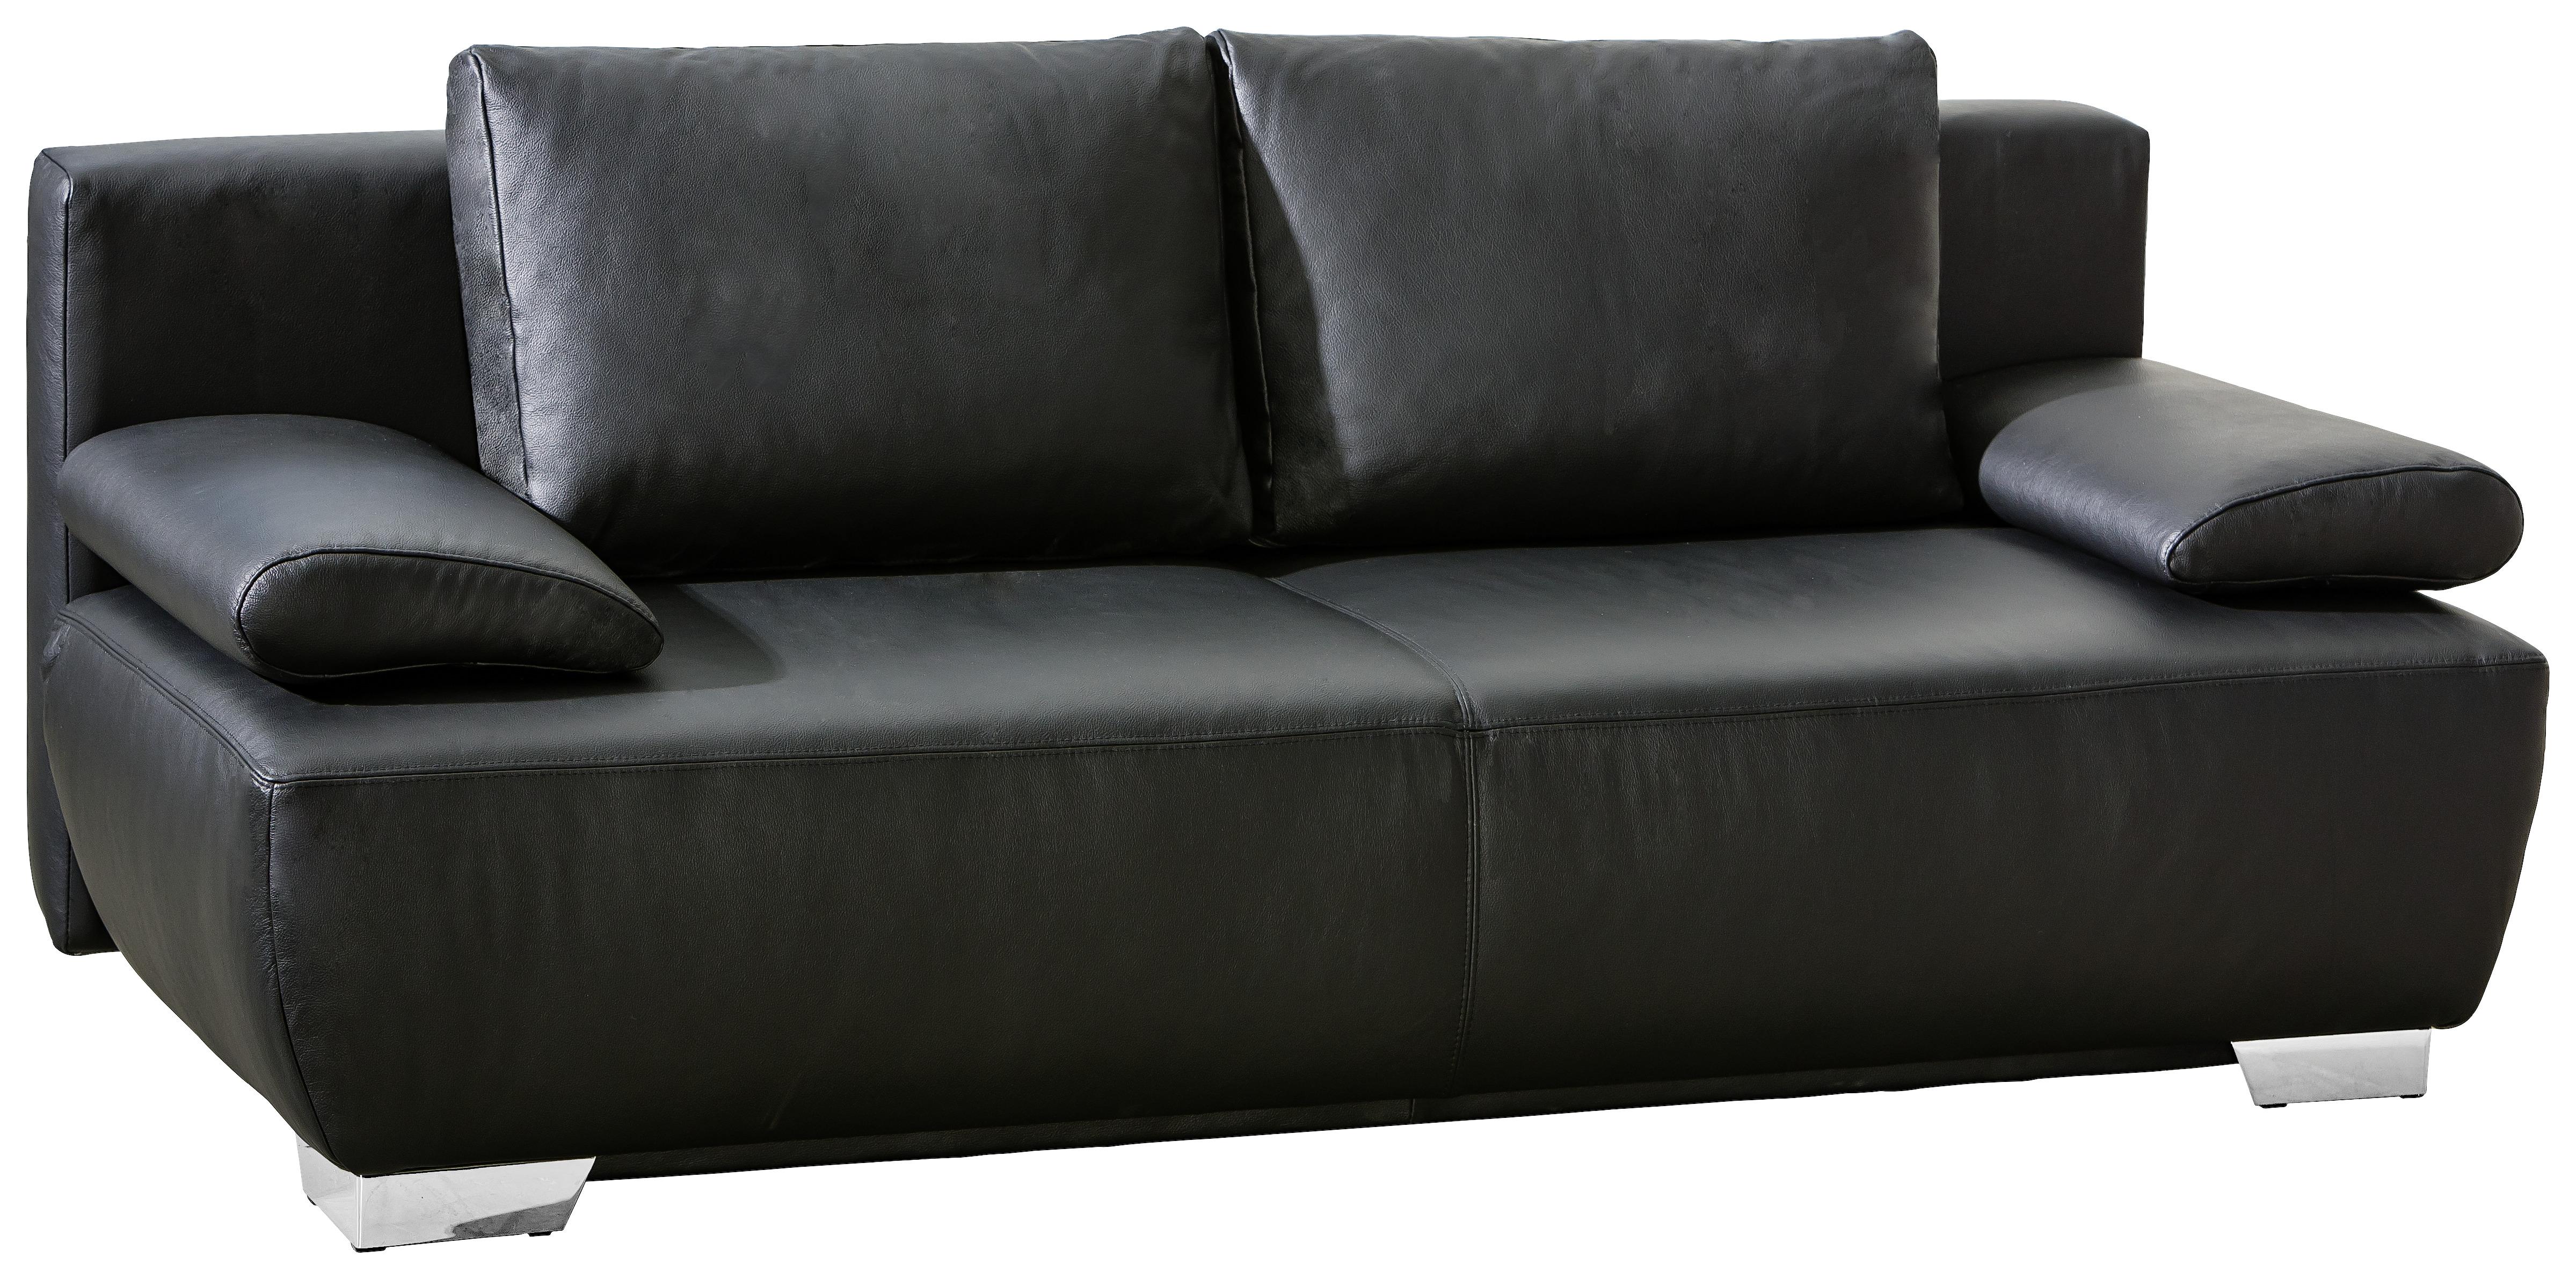 2-Sitzer-Sofa mit Schlaffunktion + Bk. Nikita Schwarz Leder - Chromfarben/Schwarz, KONVENTIONELL, Leder (195/85/90cm) - Livetastic